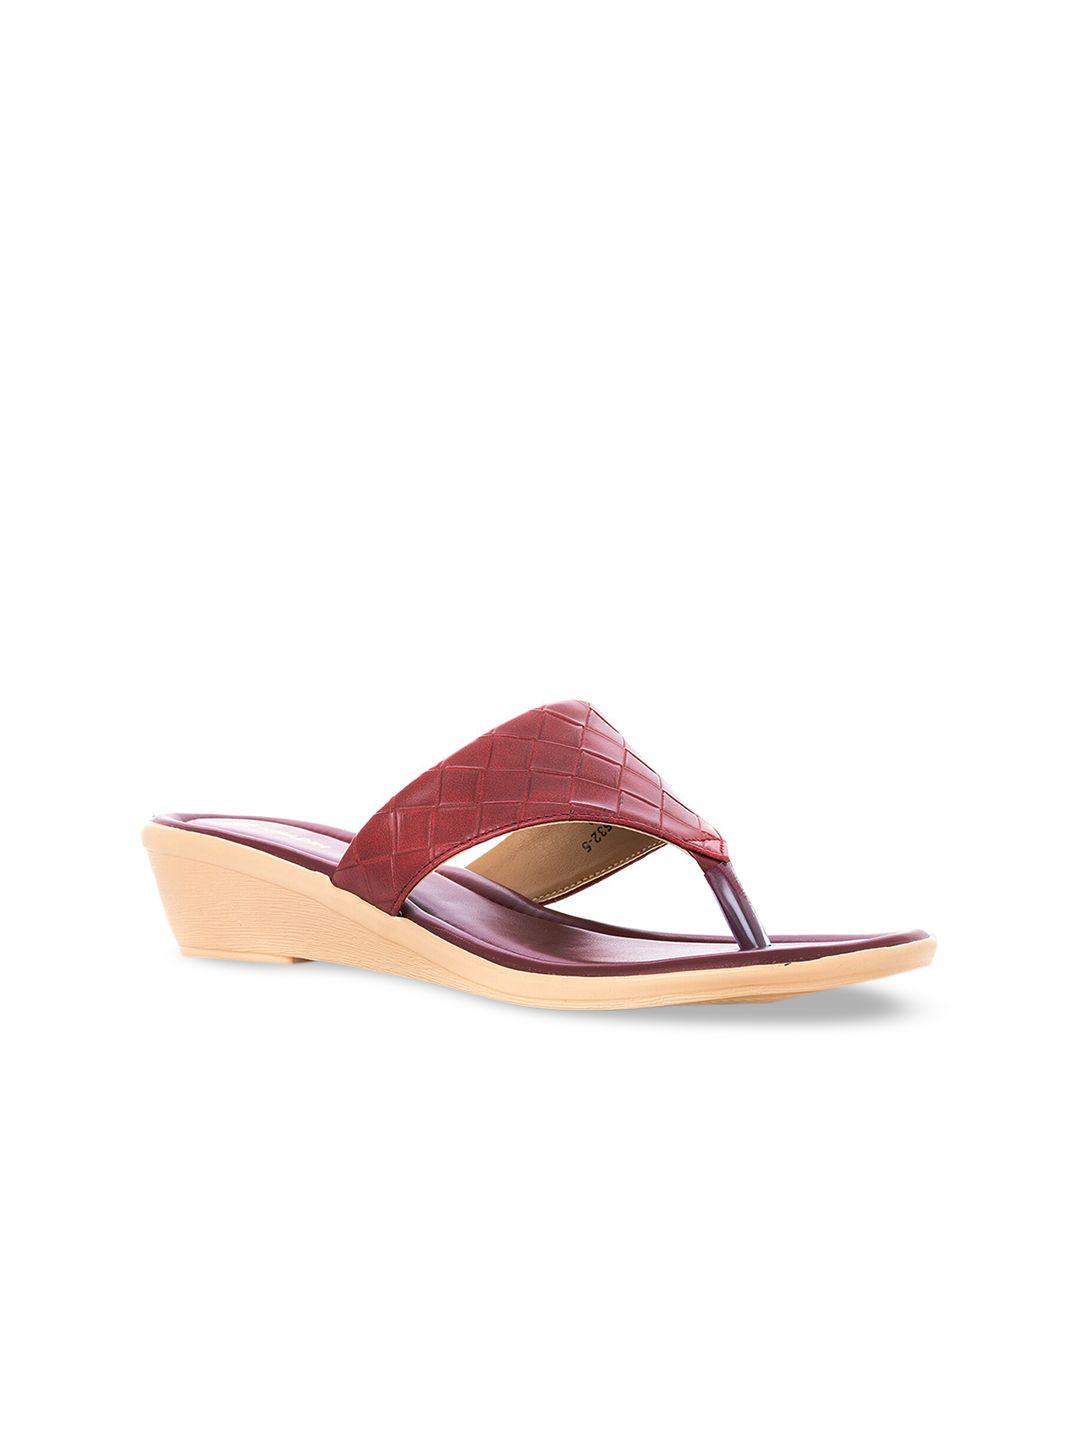 khadims-red-embellished-wedge-sandals